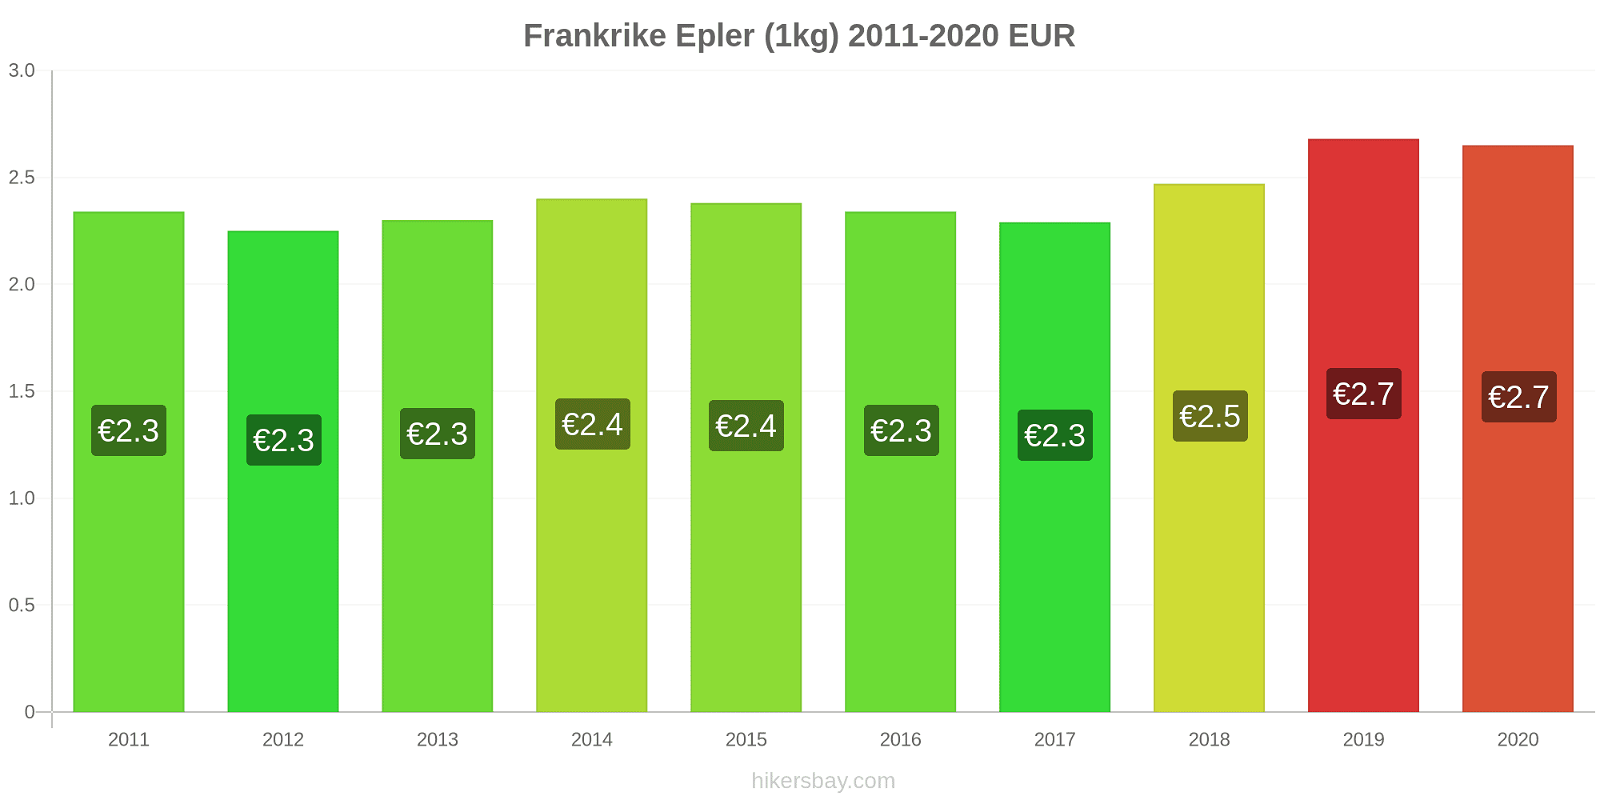 Frankrike prisendringer Epler (1kg) hikersbay.com